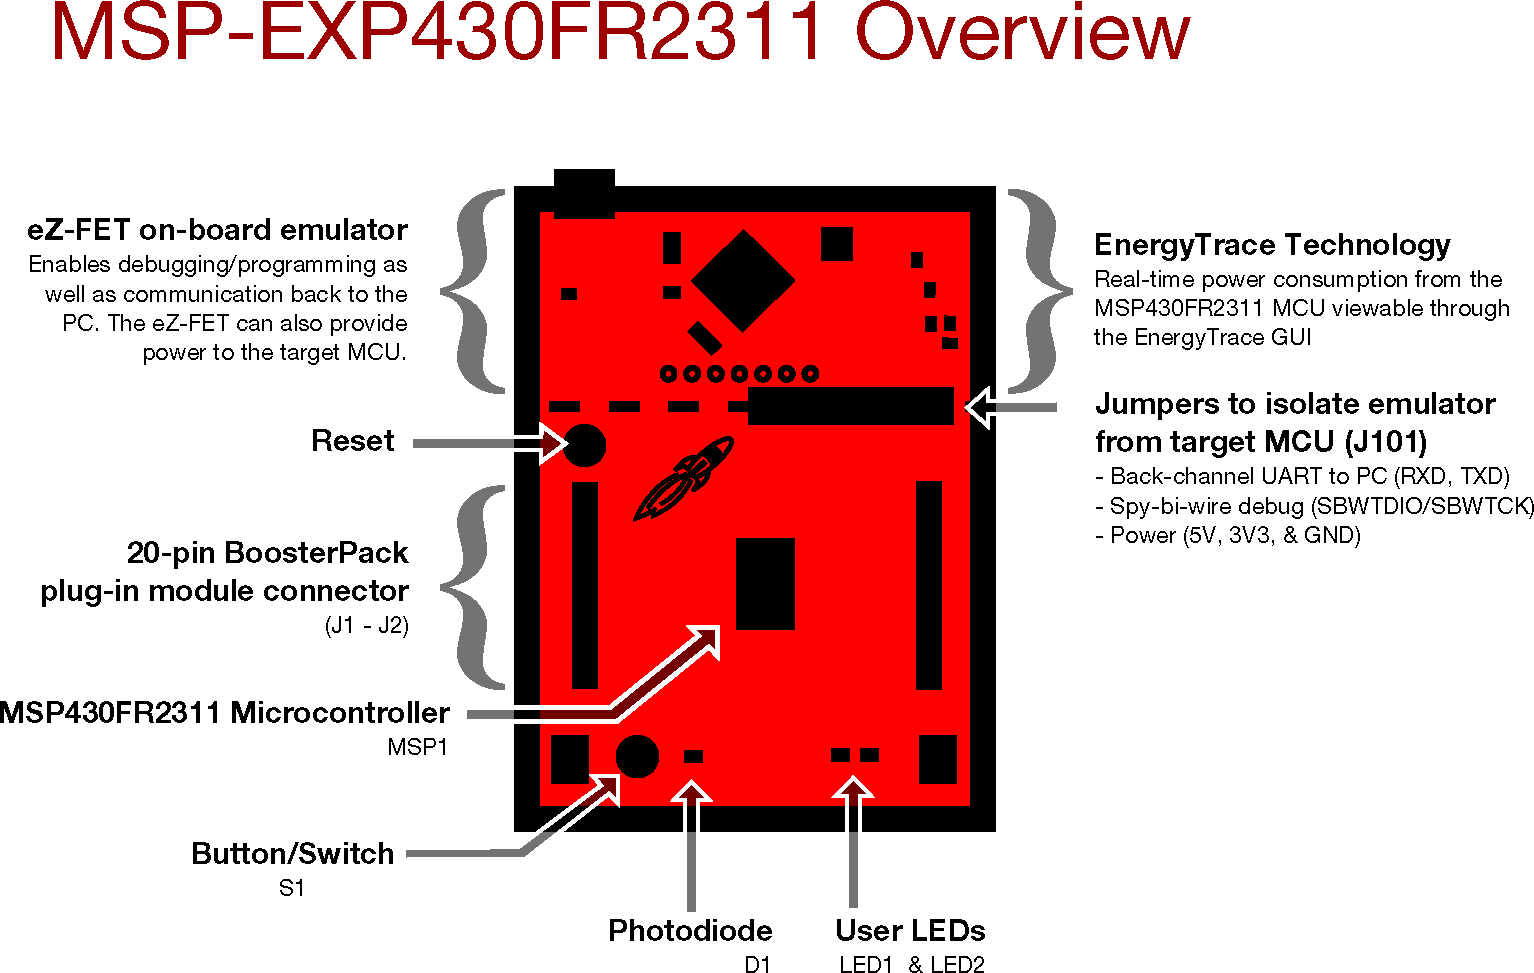 fig02_MSP-EXP430FR2311_Overview.png